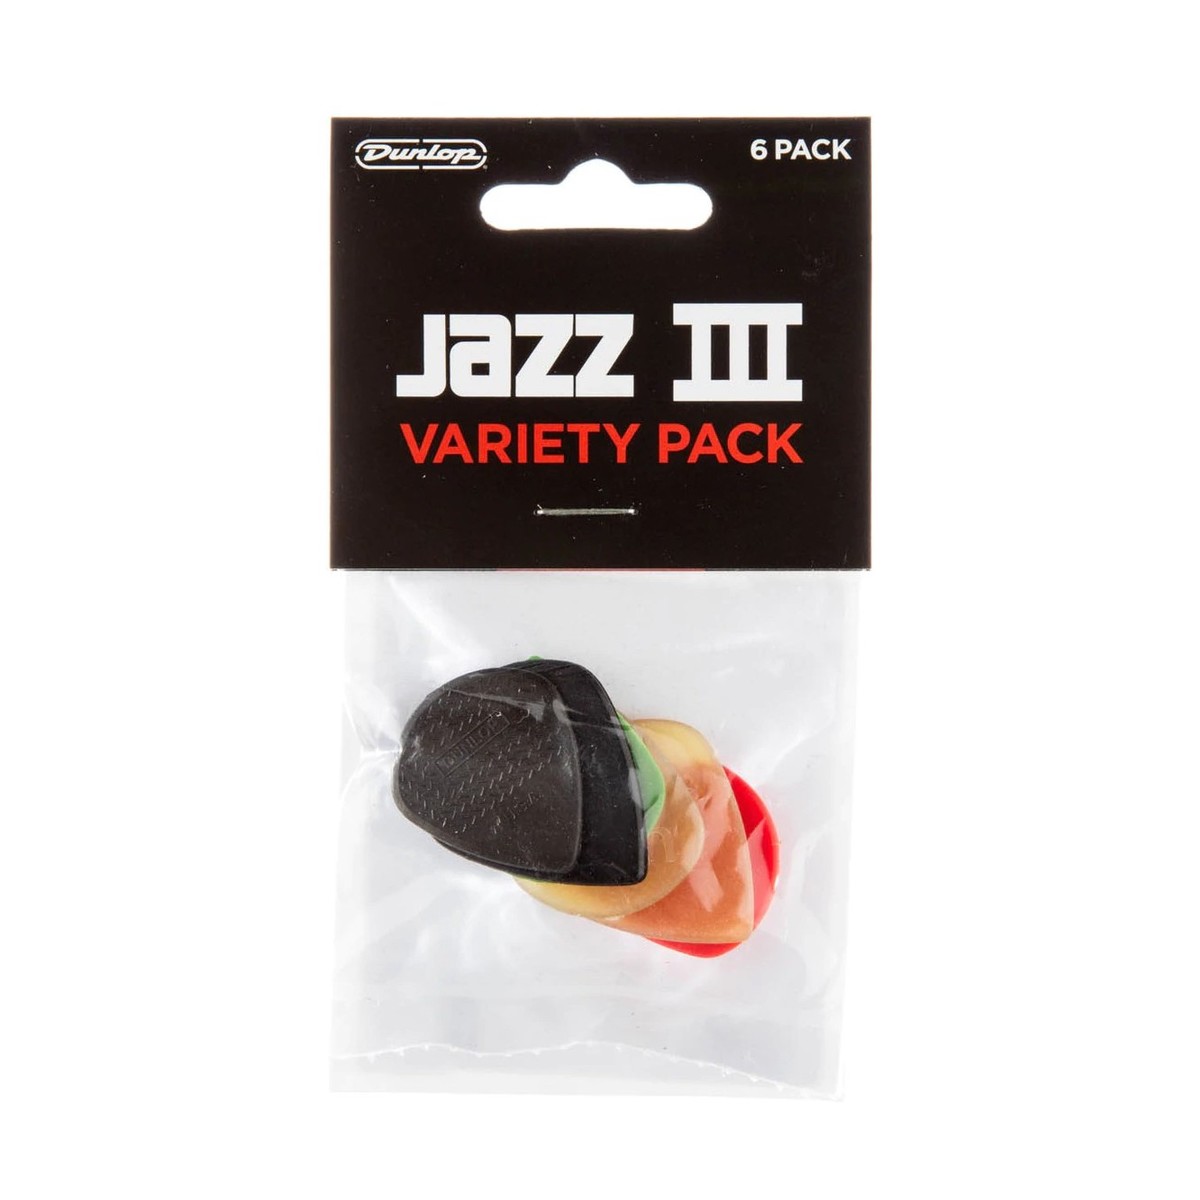 Dunlop Variety Pack PVP103 Jazz III